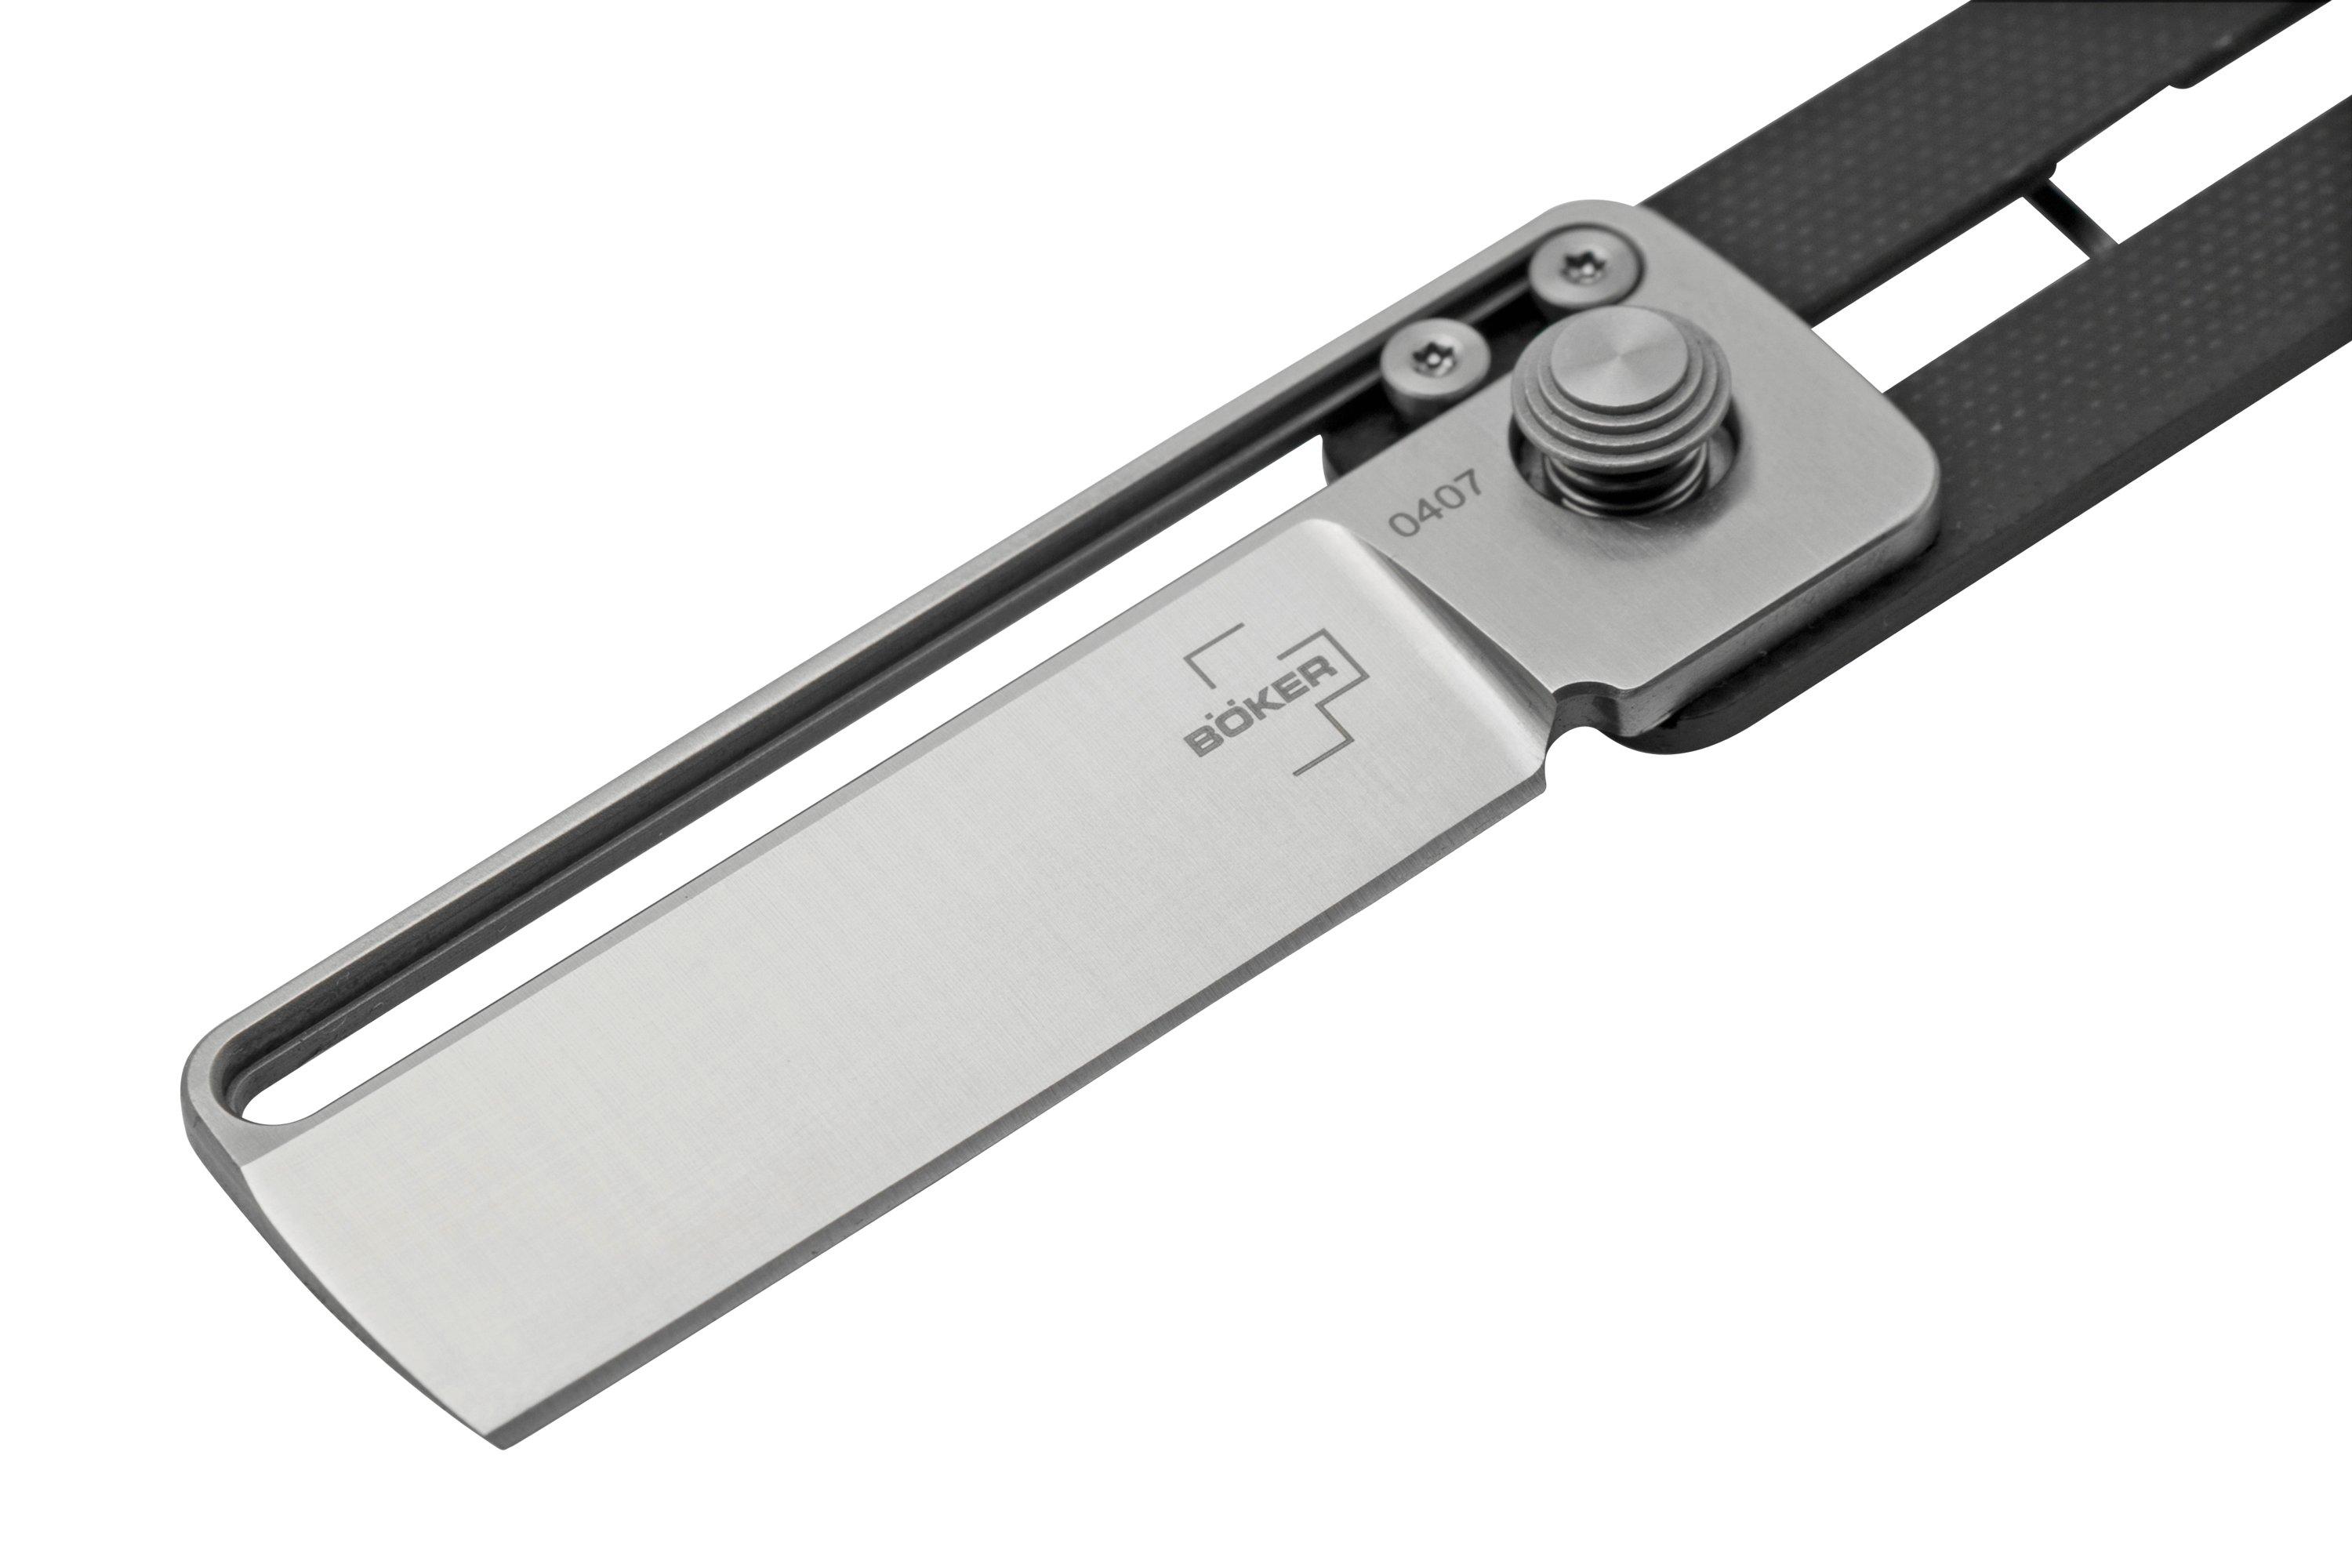 Böker Plus S-Rail 01BO556, D2, Black G10, utility knife 